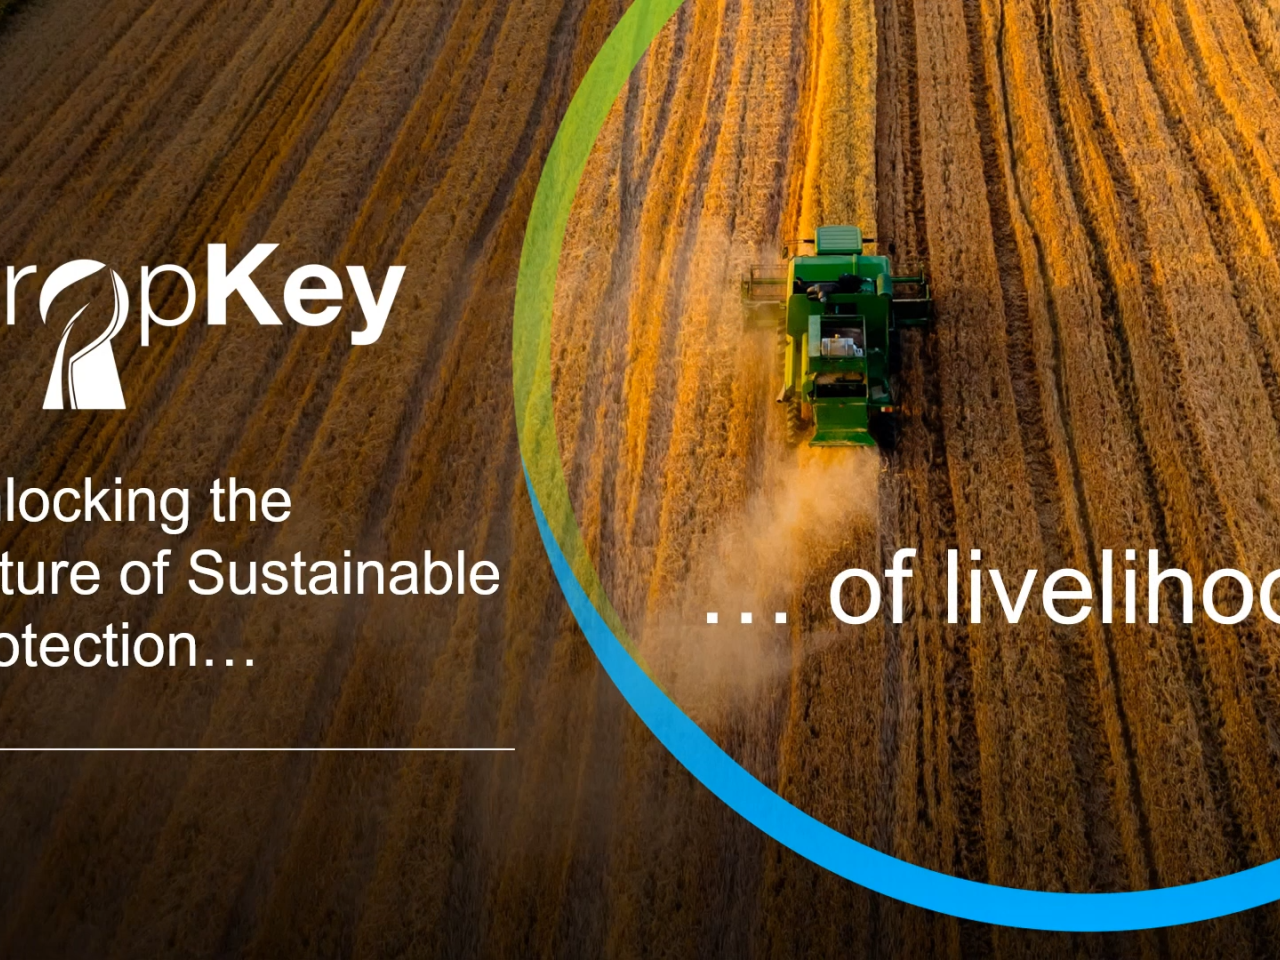 "cropkey unlocking the future of sustainable protection..."